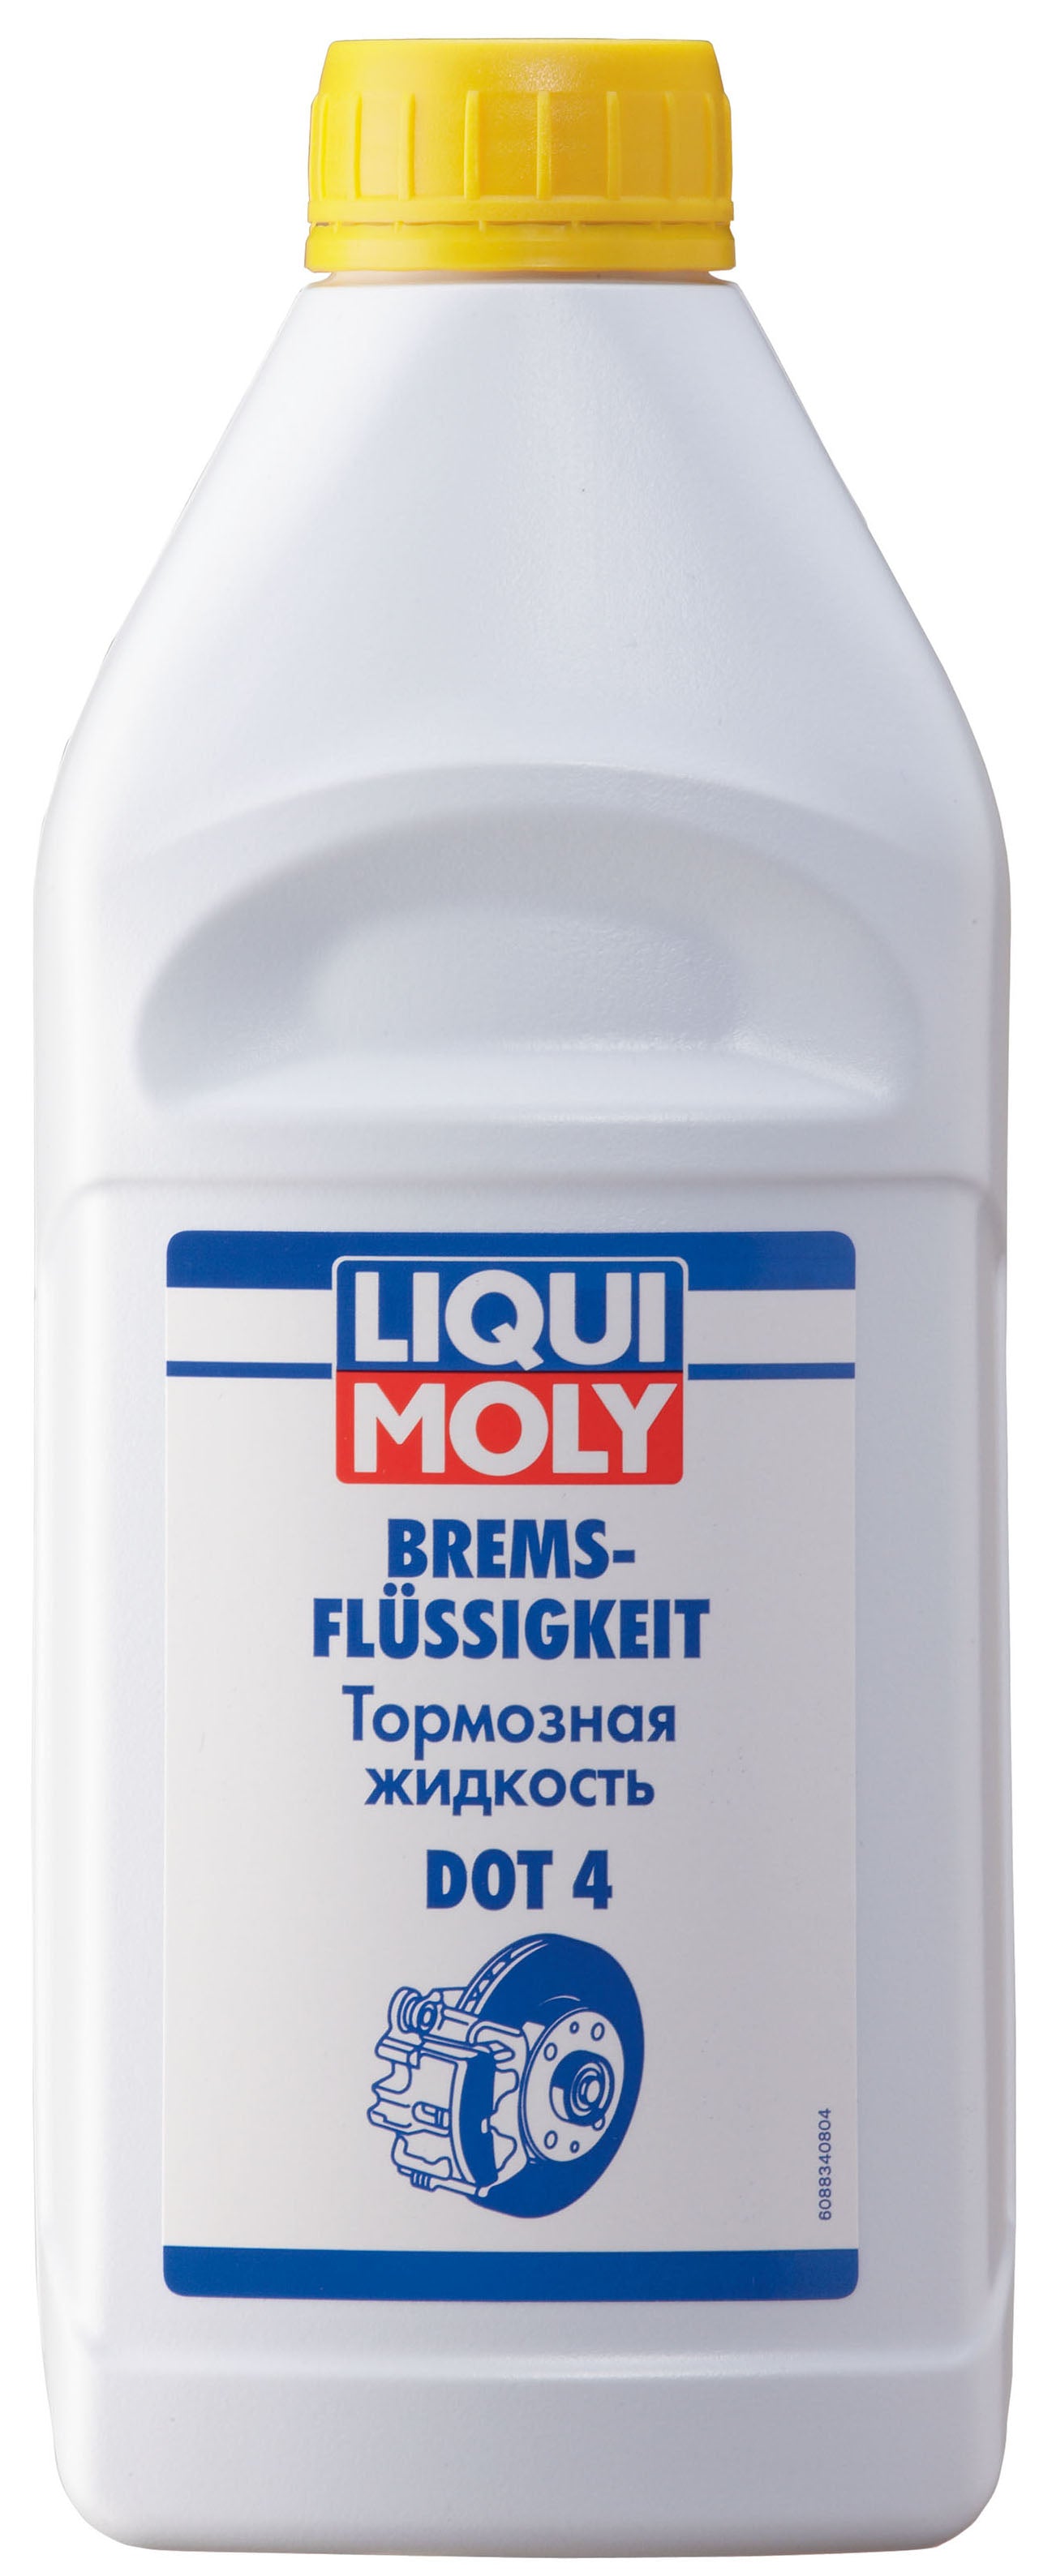 Remvloeistof Liqui Moly DOT 4 (1L) AE-trading